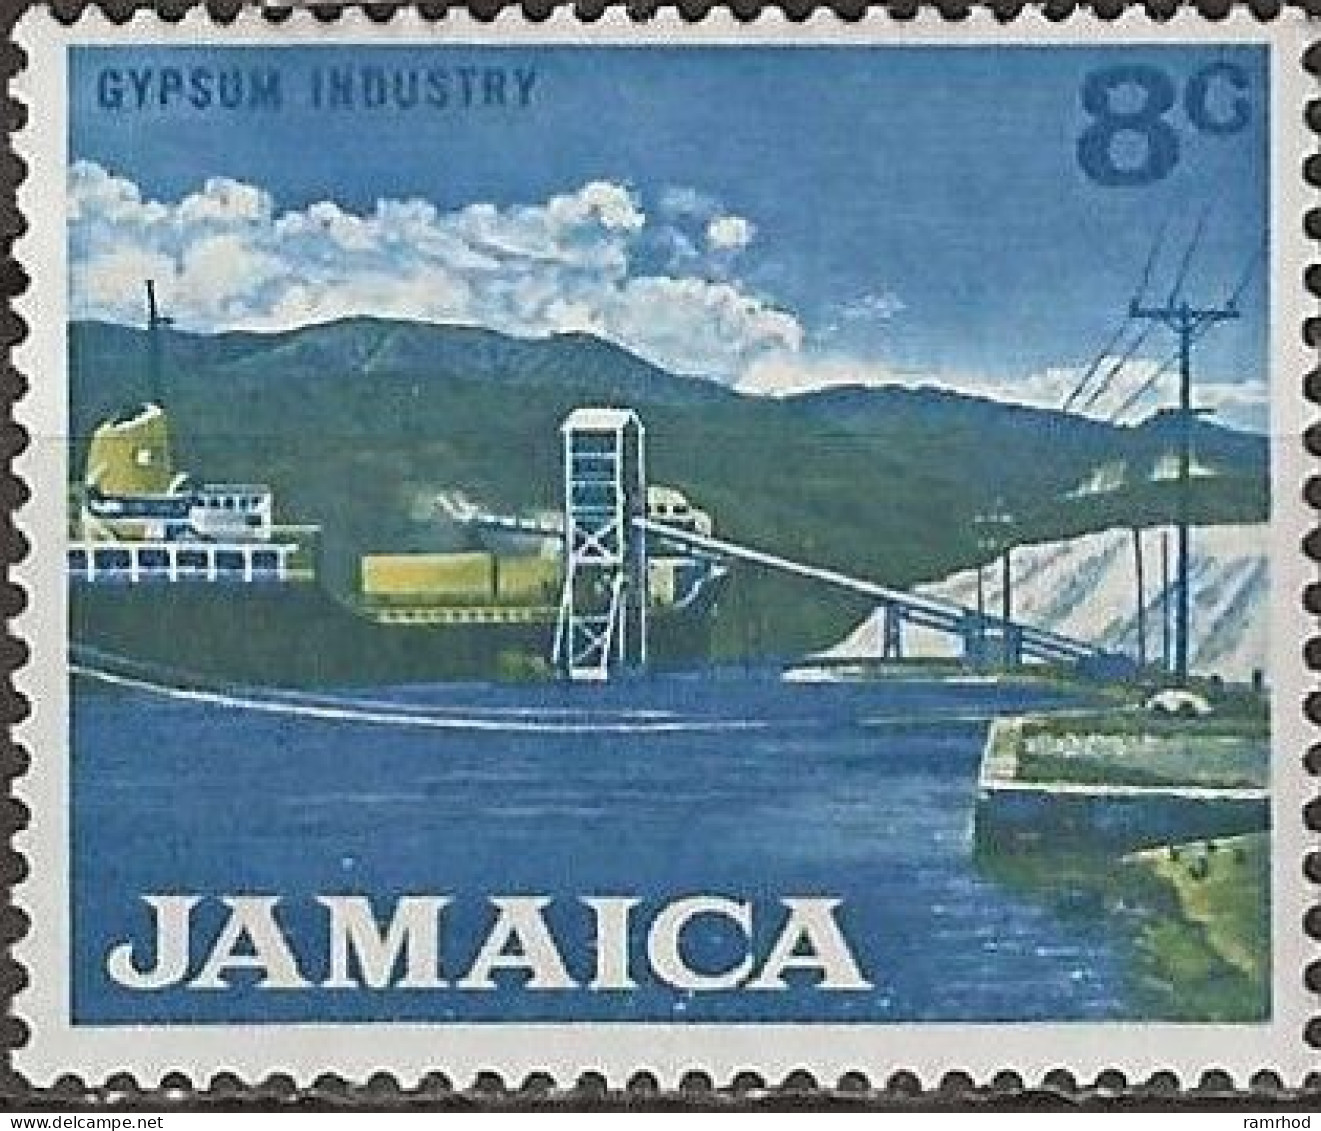 JAMAICA 1970 Decimal Currency - 8c Gypsum Industry MNH - Jamaica (1962-...)